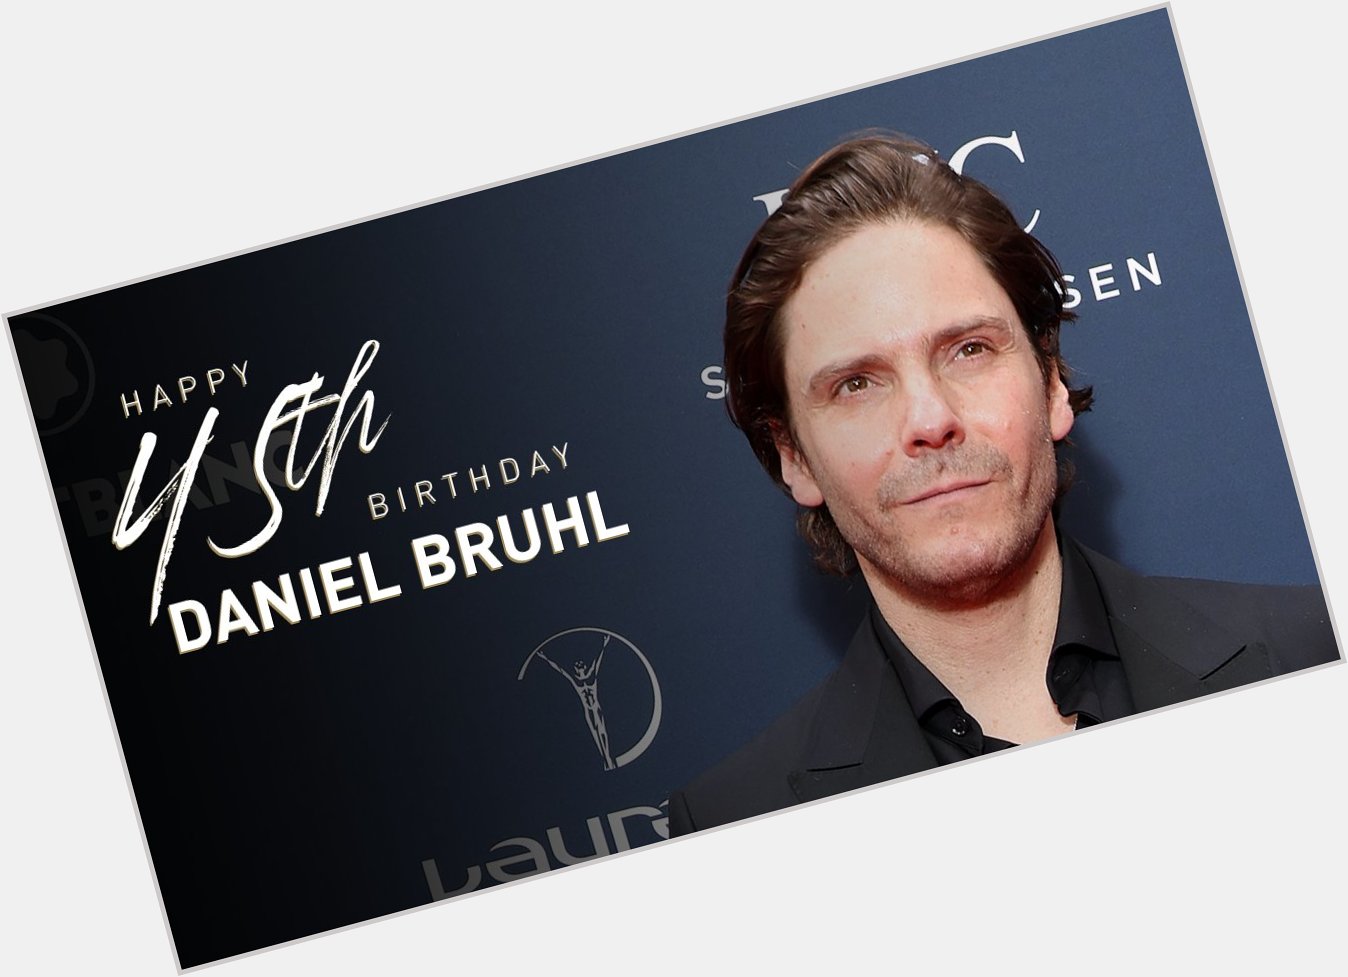 Happy 45th birthday Daniel Brühl! 

Read his bio here:  